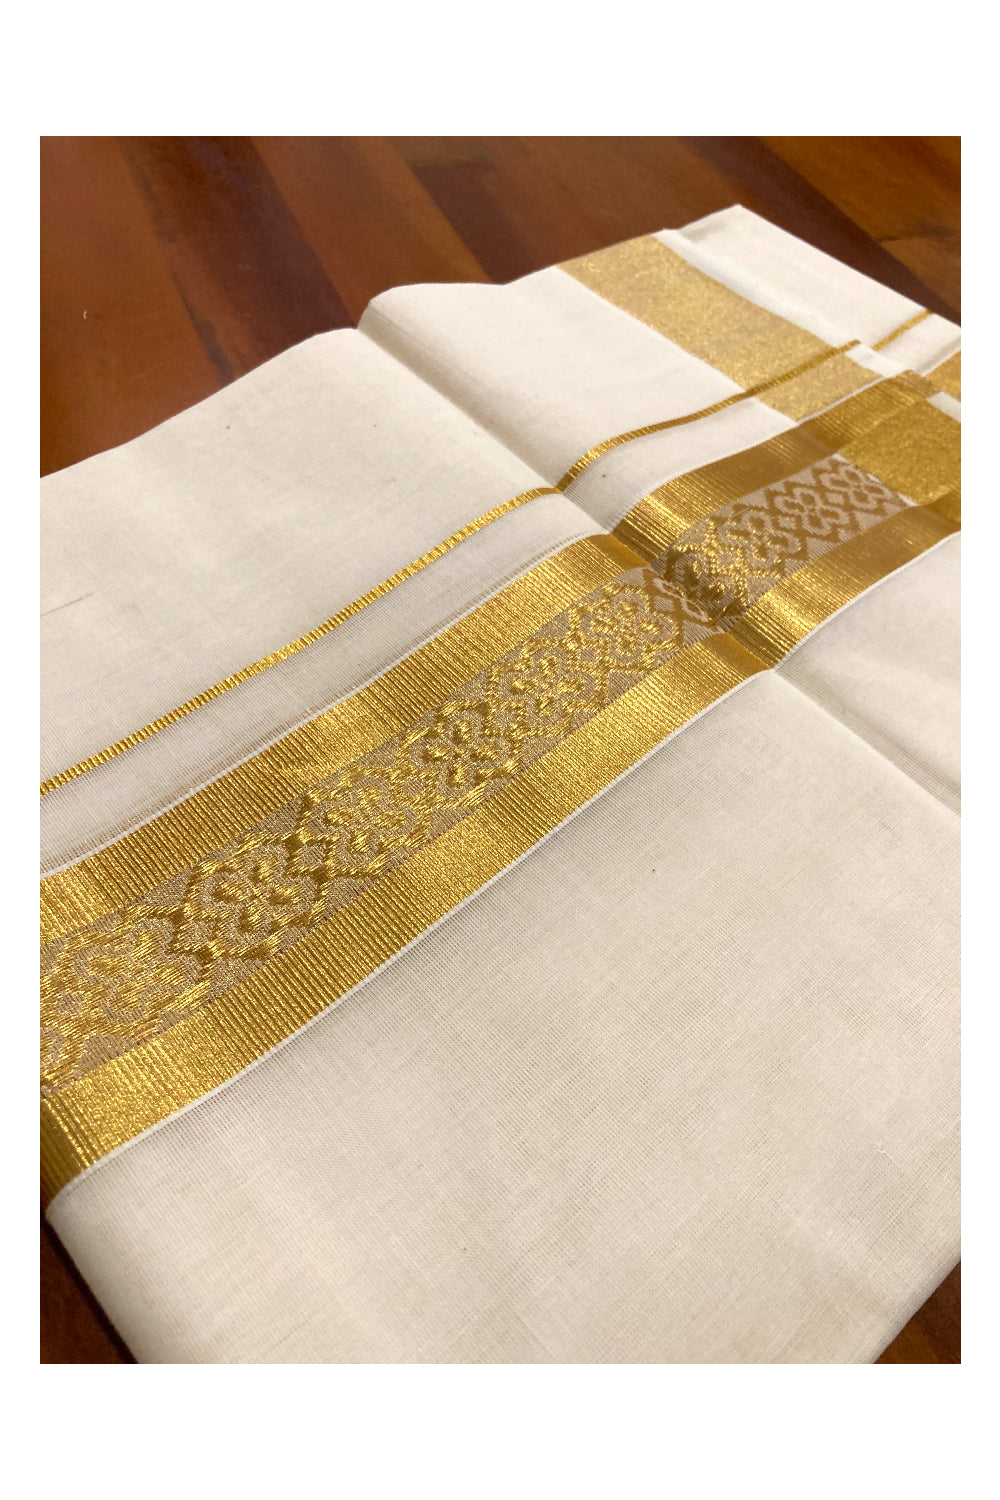 Southloom Premium Handloom Pure Cotton Wedding Mundu with Kasavu Woven Floral Patterns Border (South Indian Kerala Dhoti)